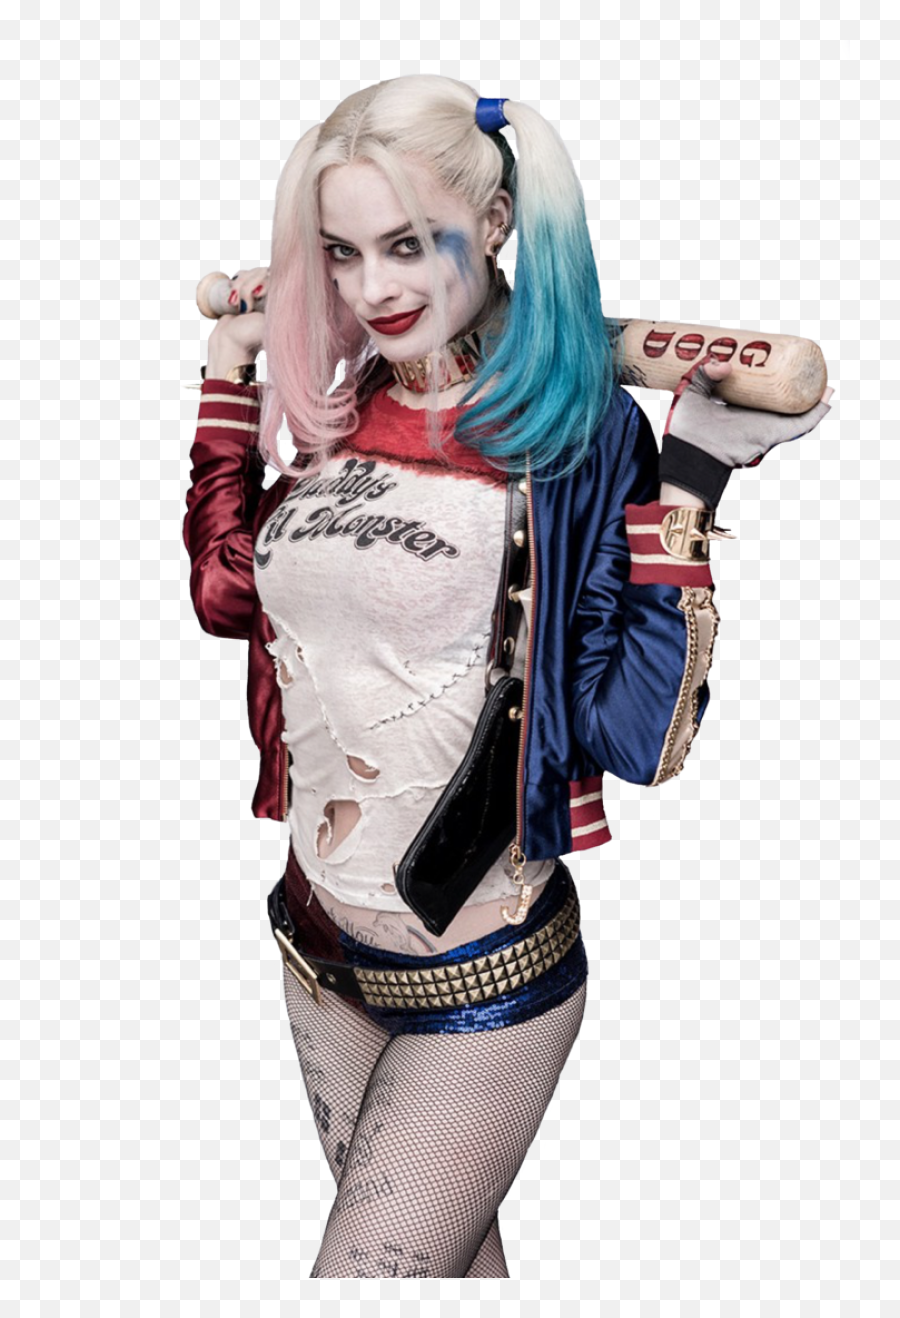 Download Harley Quinn Suicide Squad Png Image For Free - Harley Quinn Margot Robbie,Suicide Squad Logo